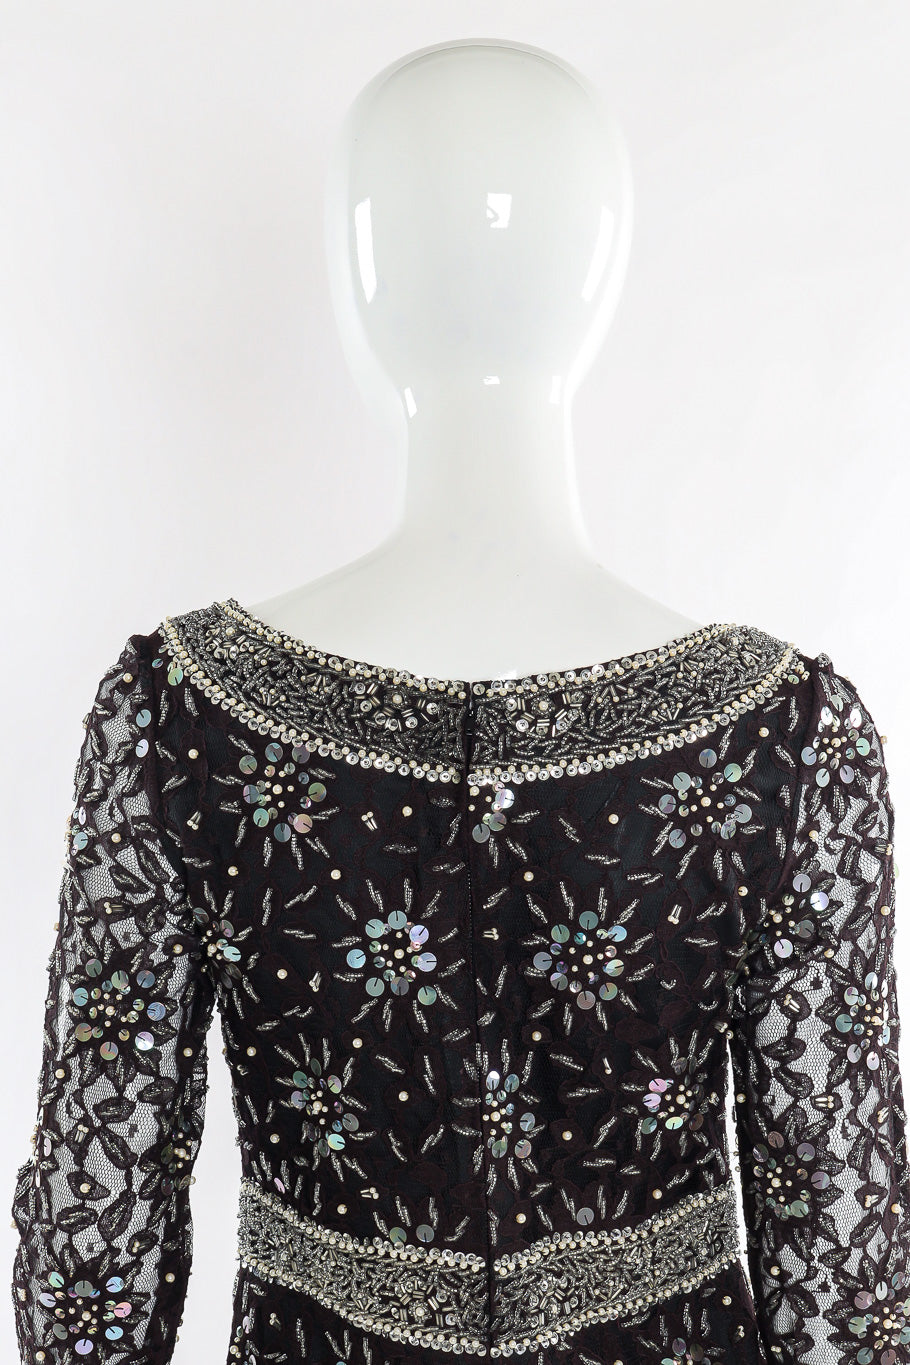 Vintage beaded and sequin lace set shoulder top photo details.@recessla